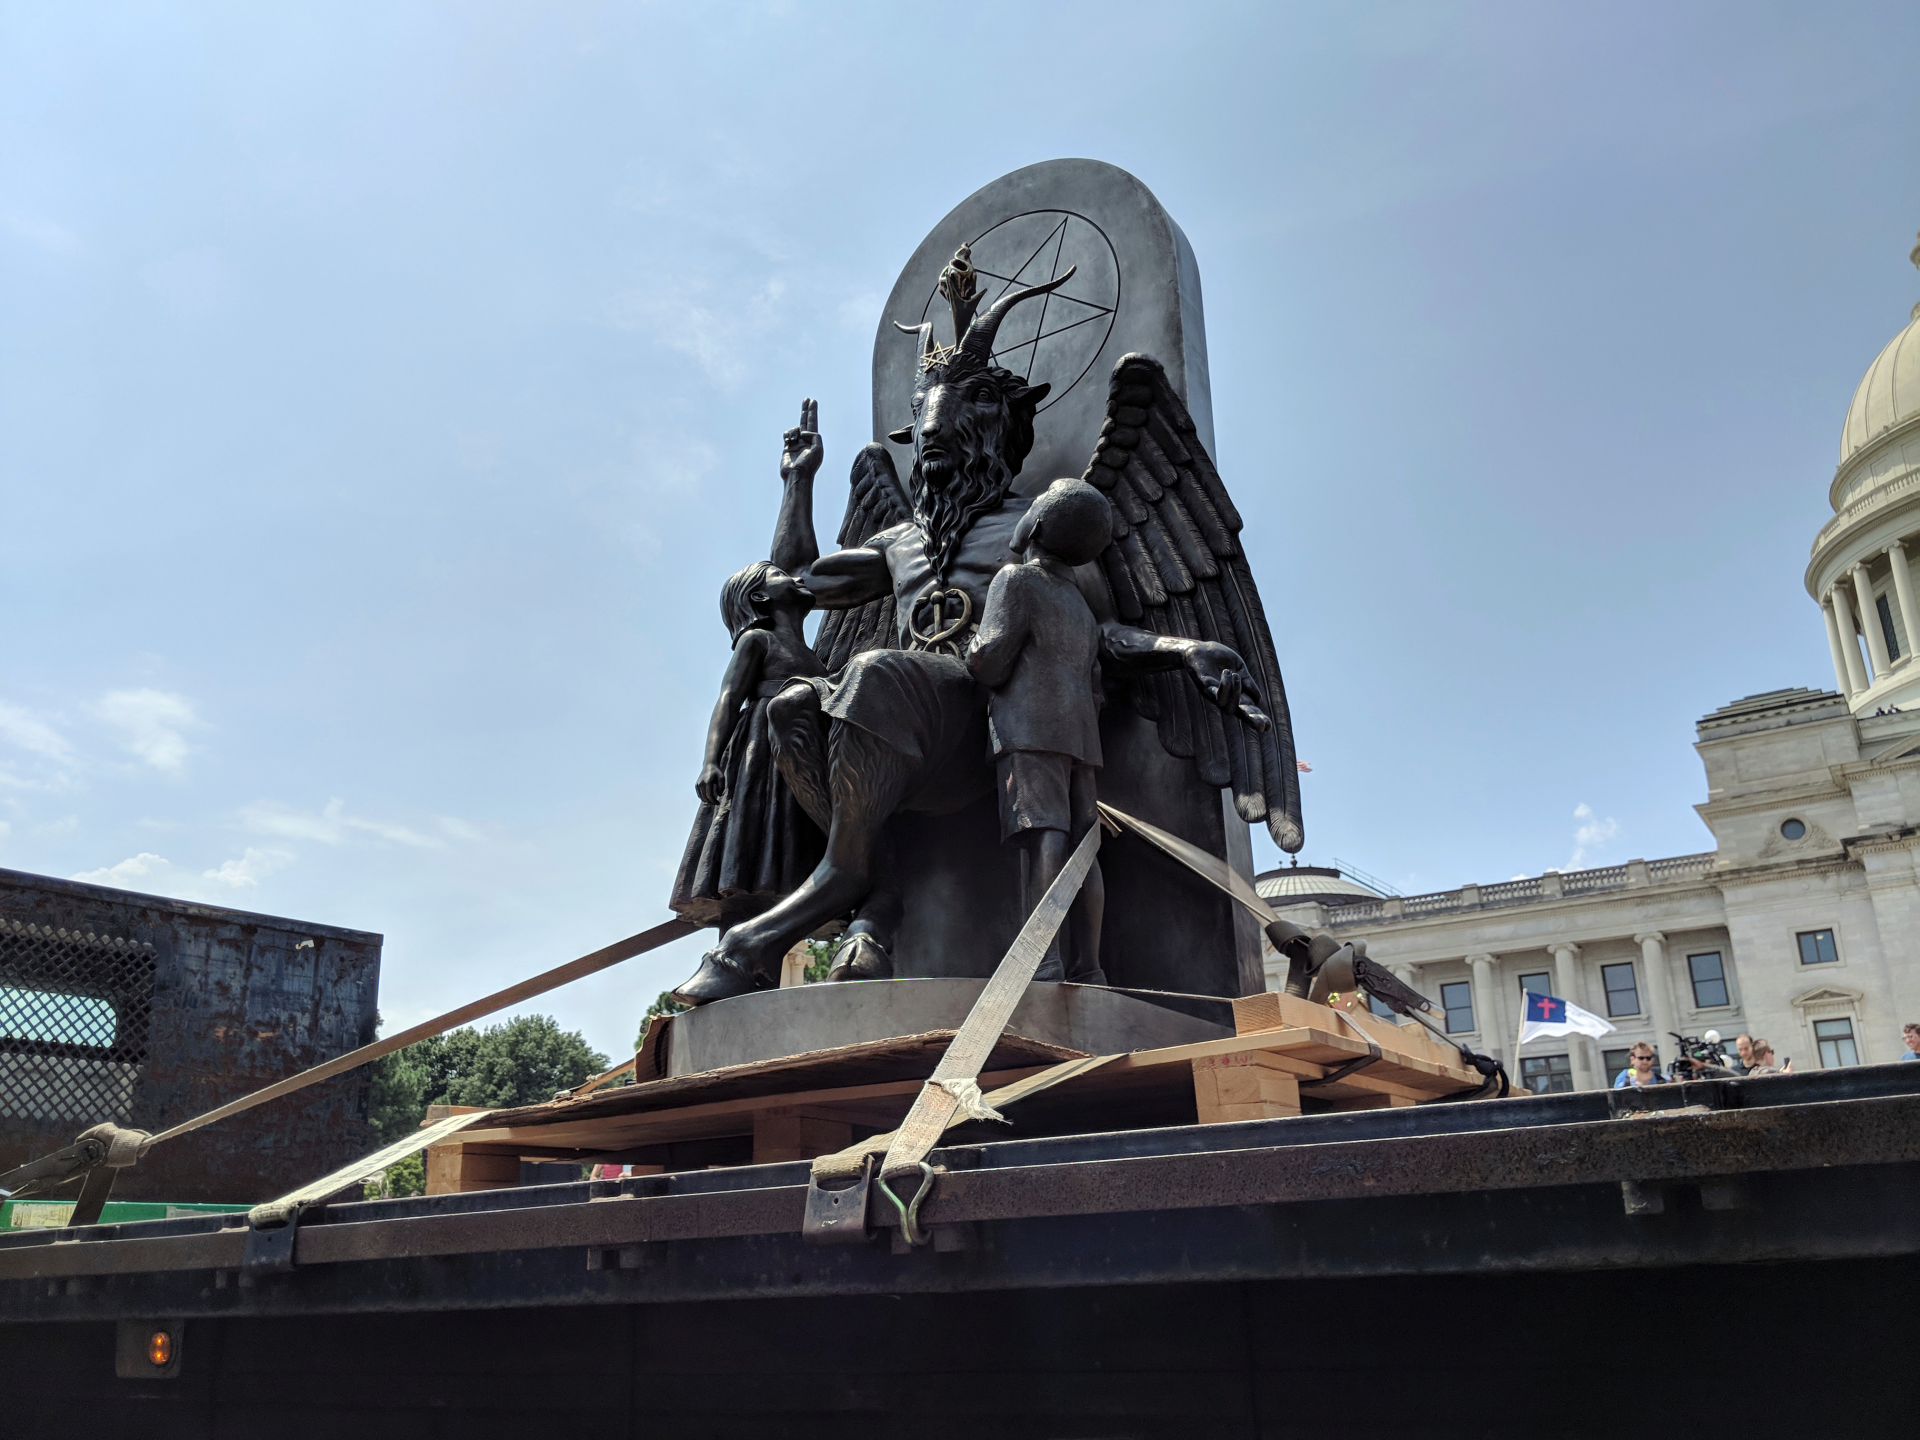 Satanic Temple brings Baphomet statue to Arkansas for rally